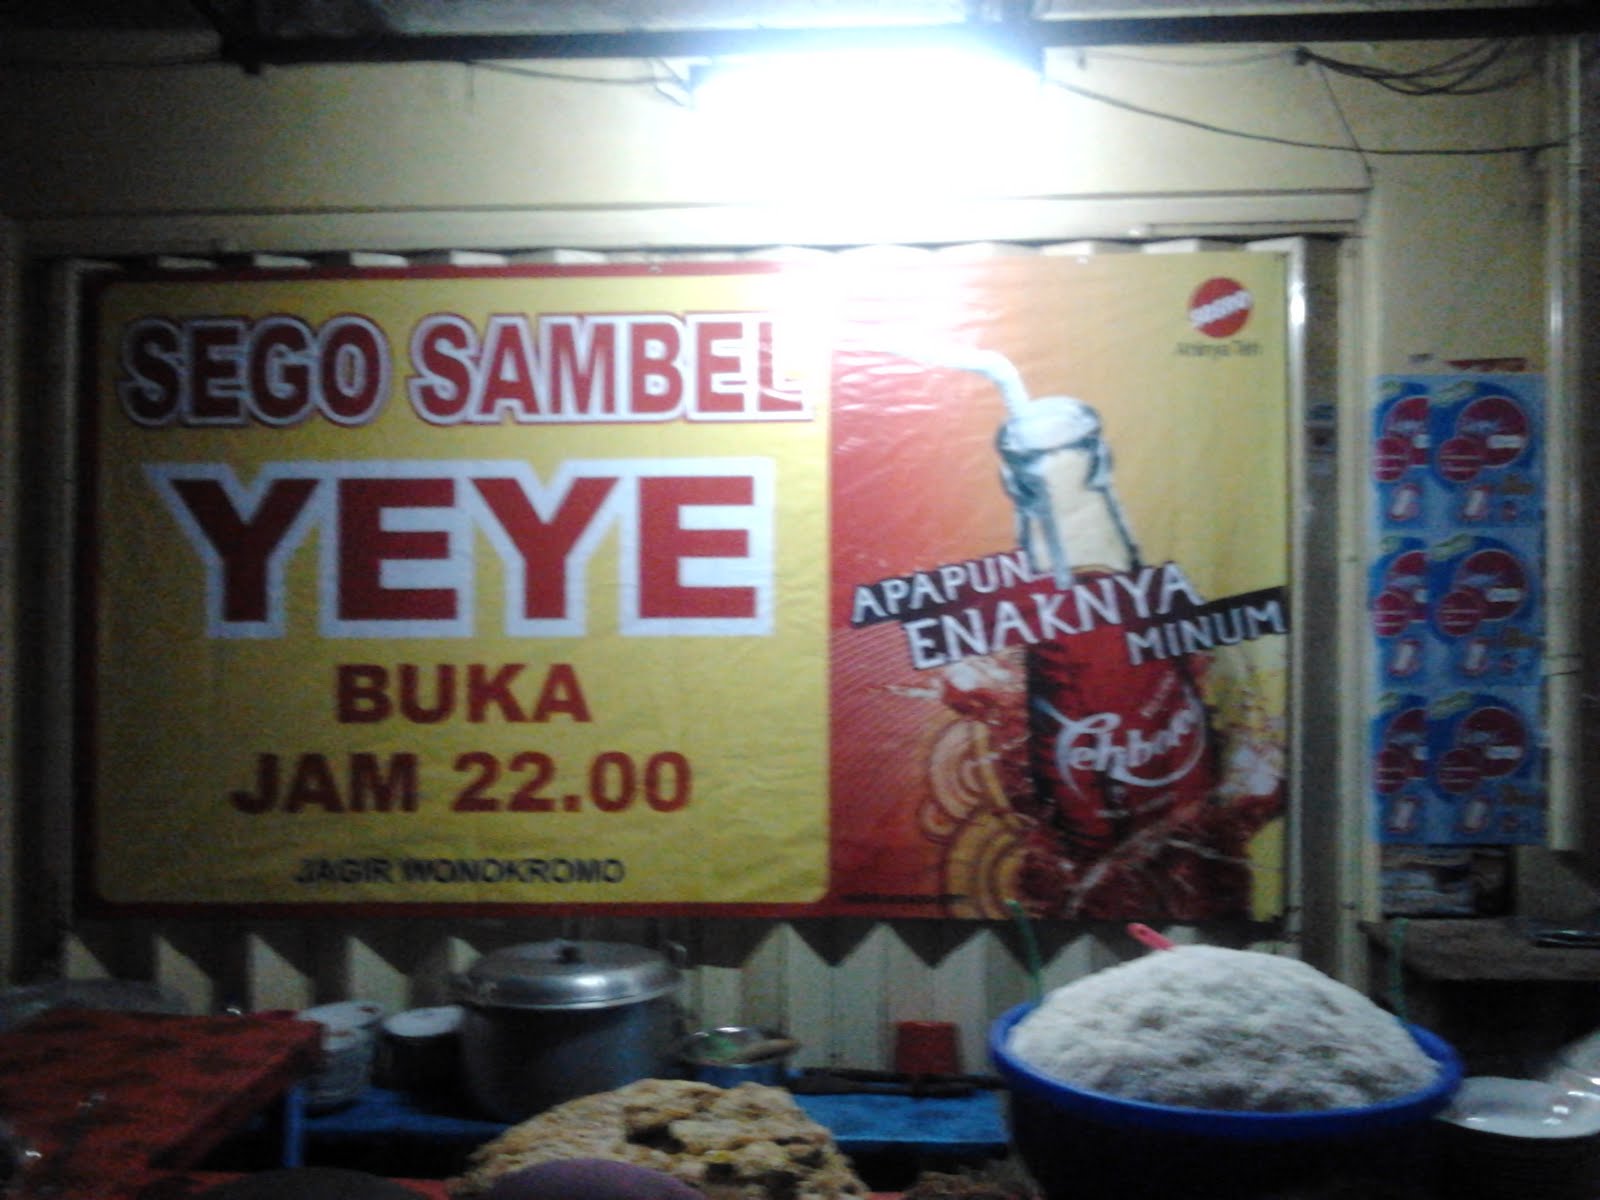 Penampakan Sego Sambel "YEYE" Wonokromo via pangananlekosuroboyo.blogspot.co.id